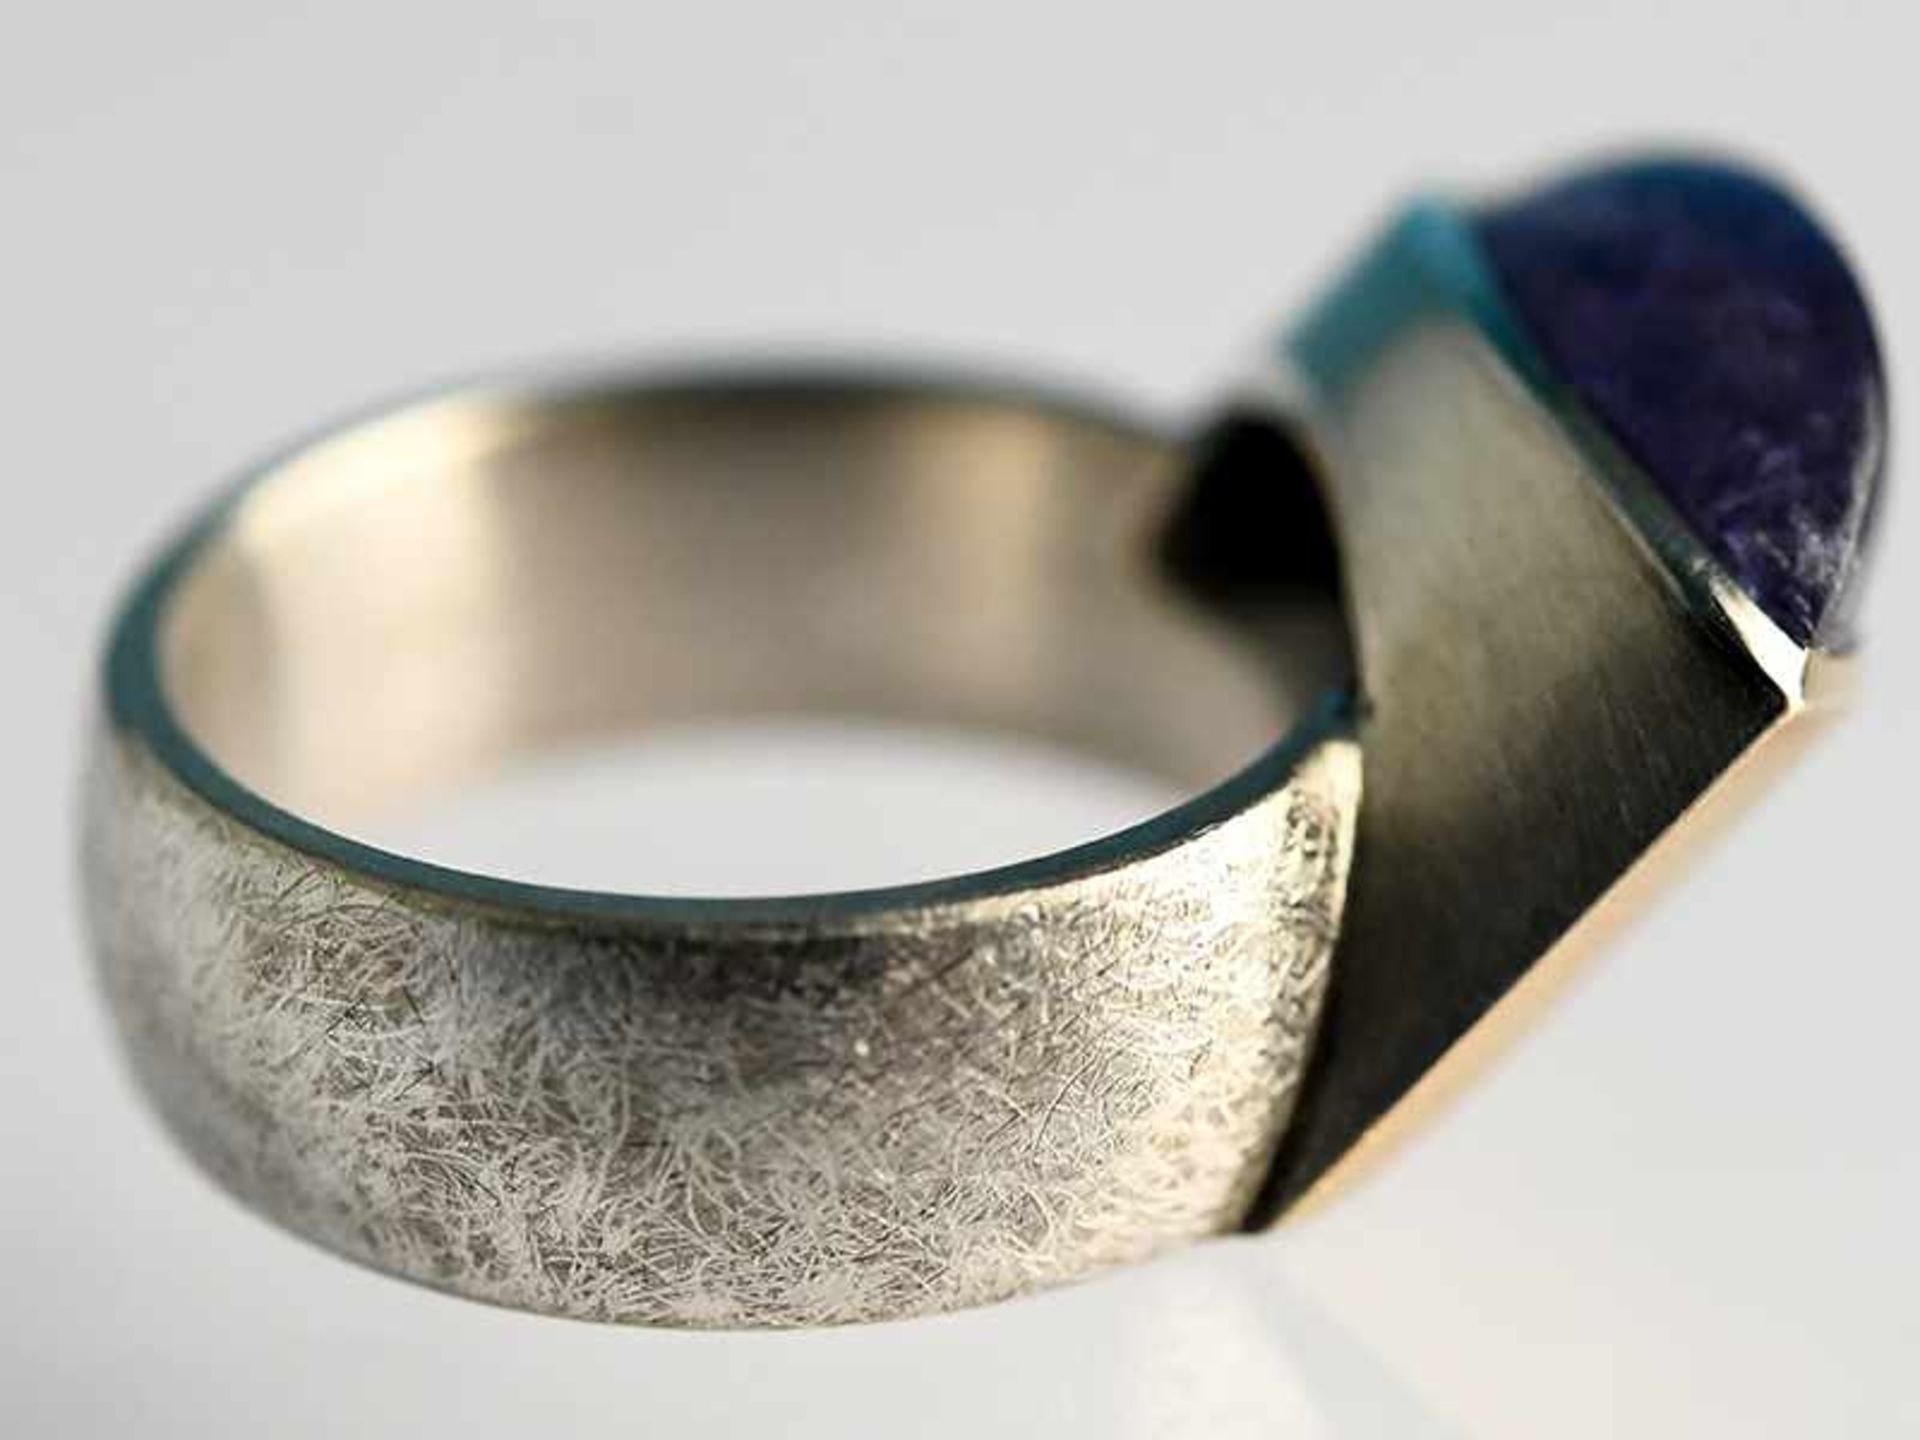 Moderner Ring mit Tansanit-Cabochon, Goldschmiedearbeit, 21. Jh. 925/- Silber und 585/- Gelbgold. - Image 3 of 7